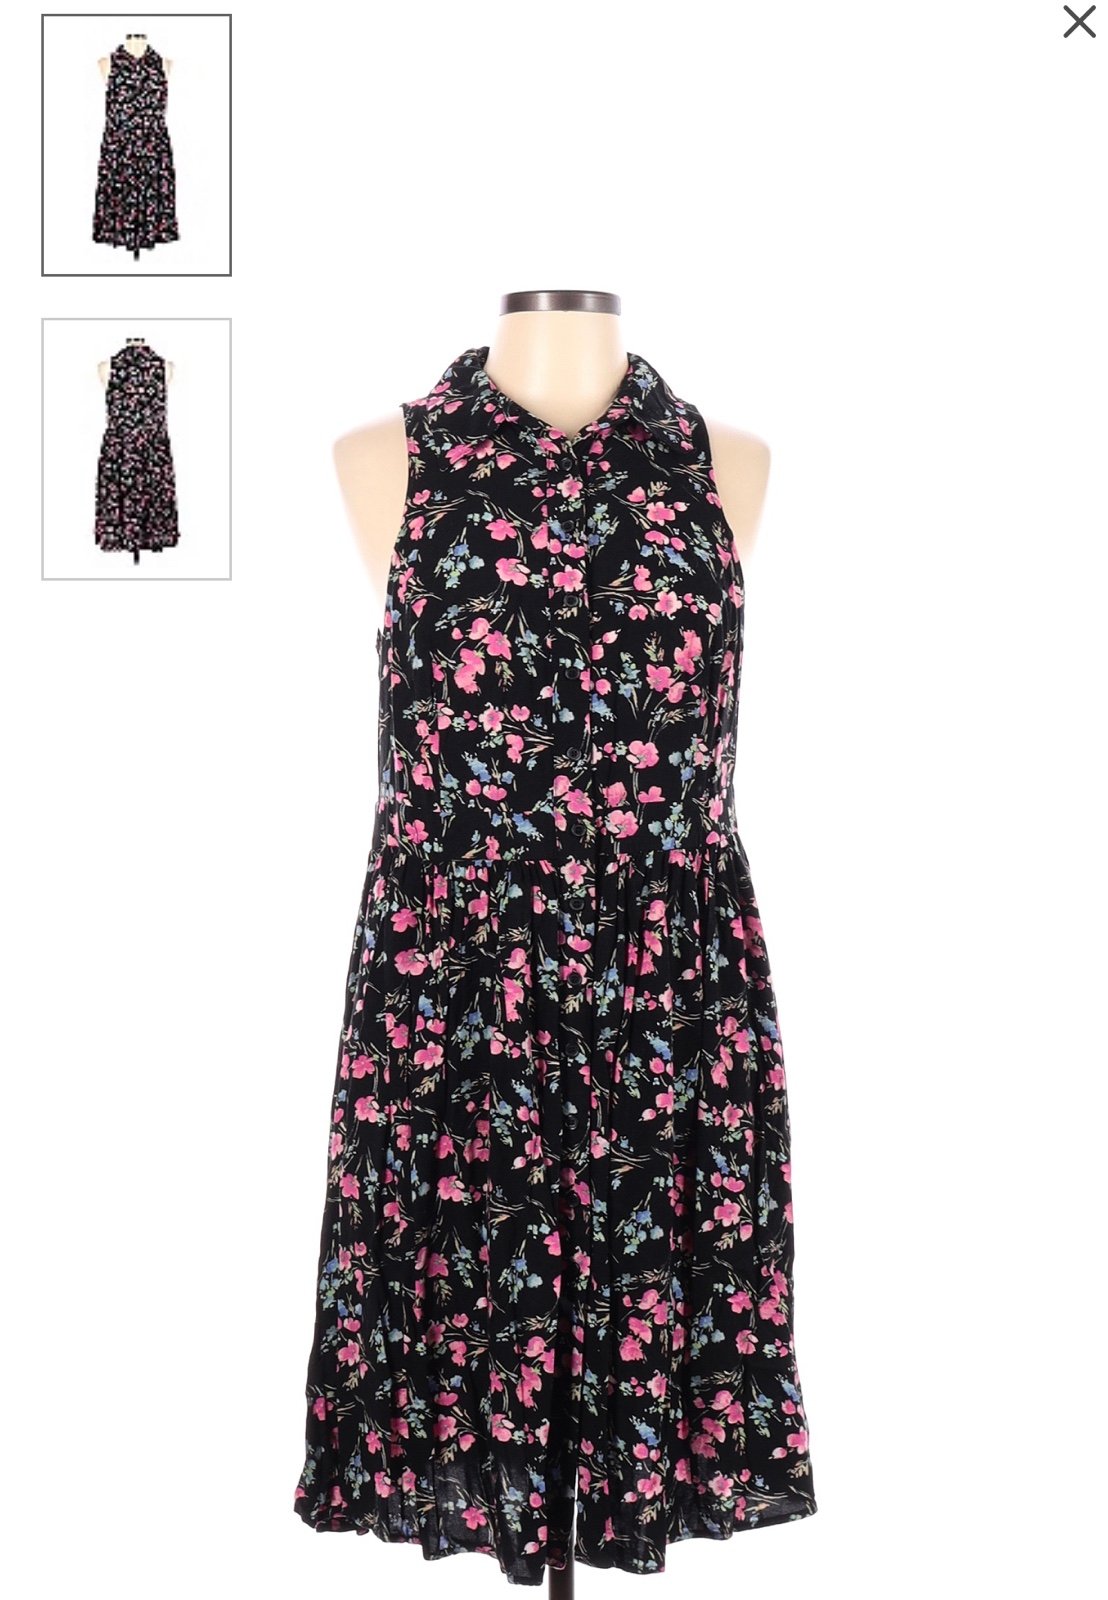 Rare -Torrid dress size 4  pink floral RN #148862 AuuvL